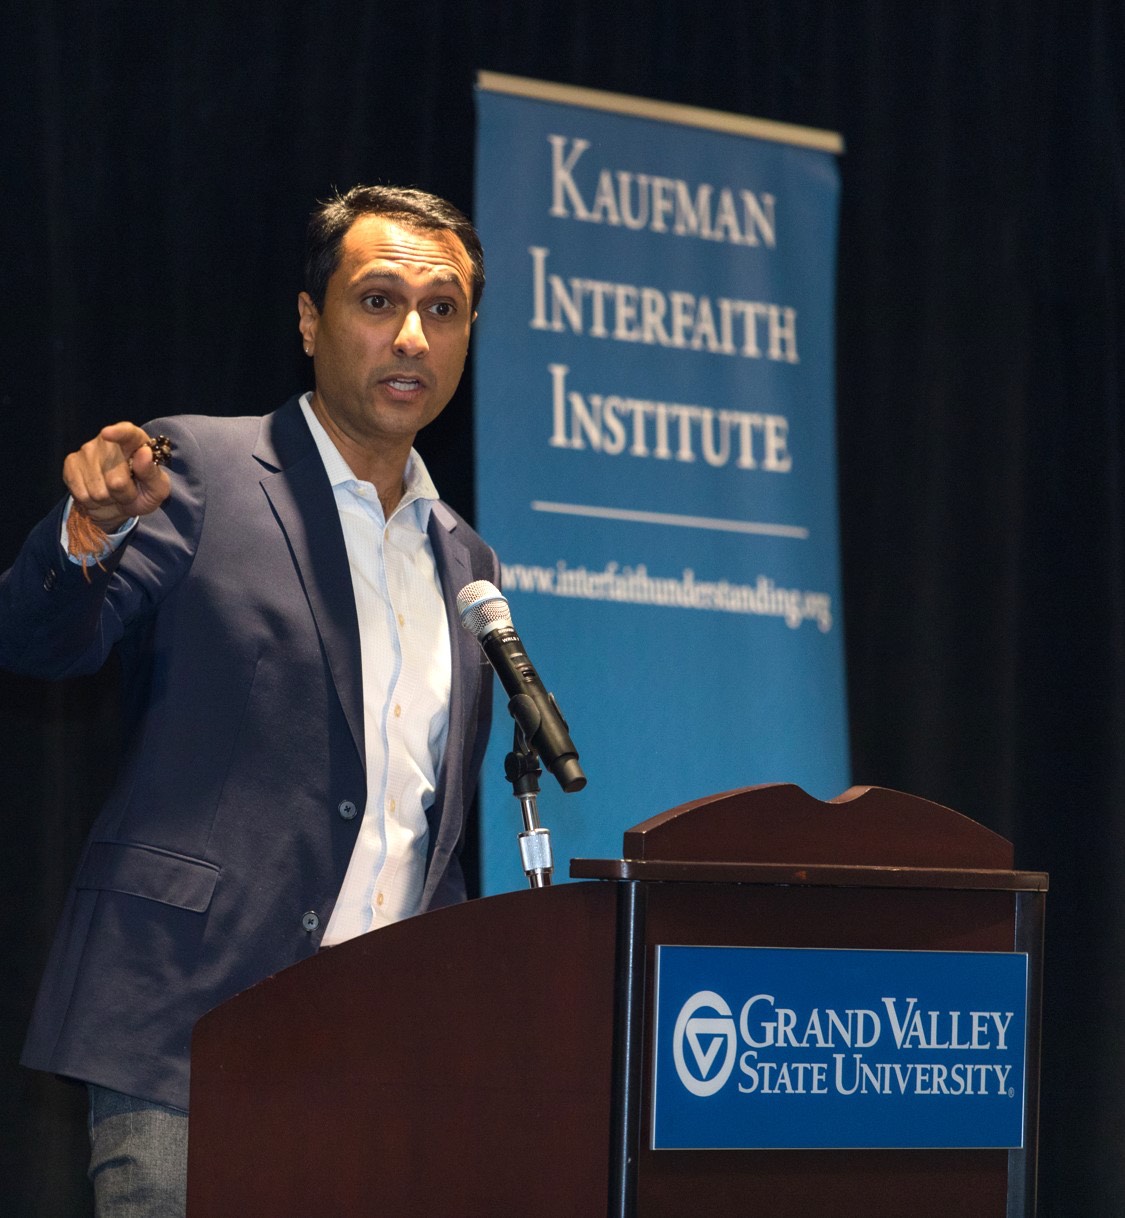 Eboo Patel presenting at GVSU with Kaufman Interfaith Institute banner in background